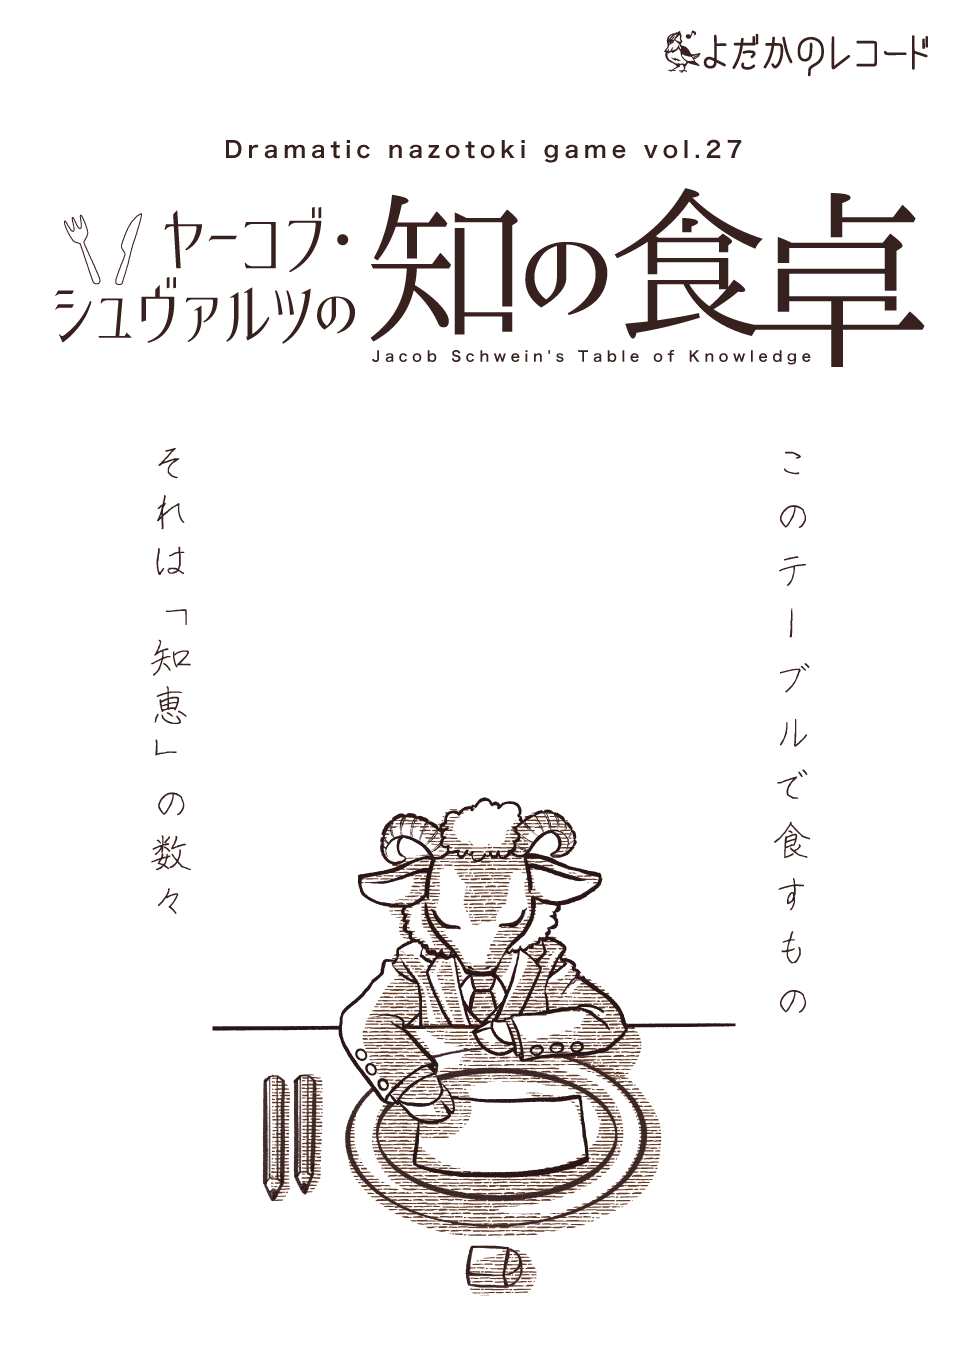 Dramatic nazotoki game vol.27「ヤーコブ・シュヴァルツの知の食卓」【東京】